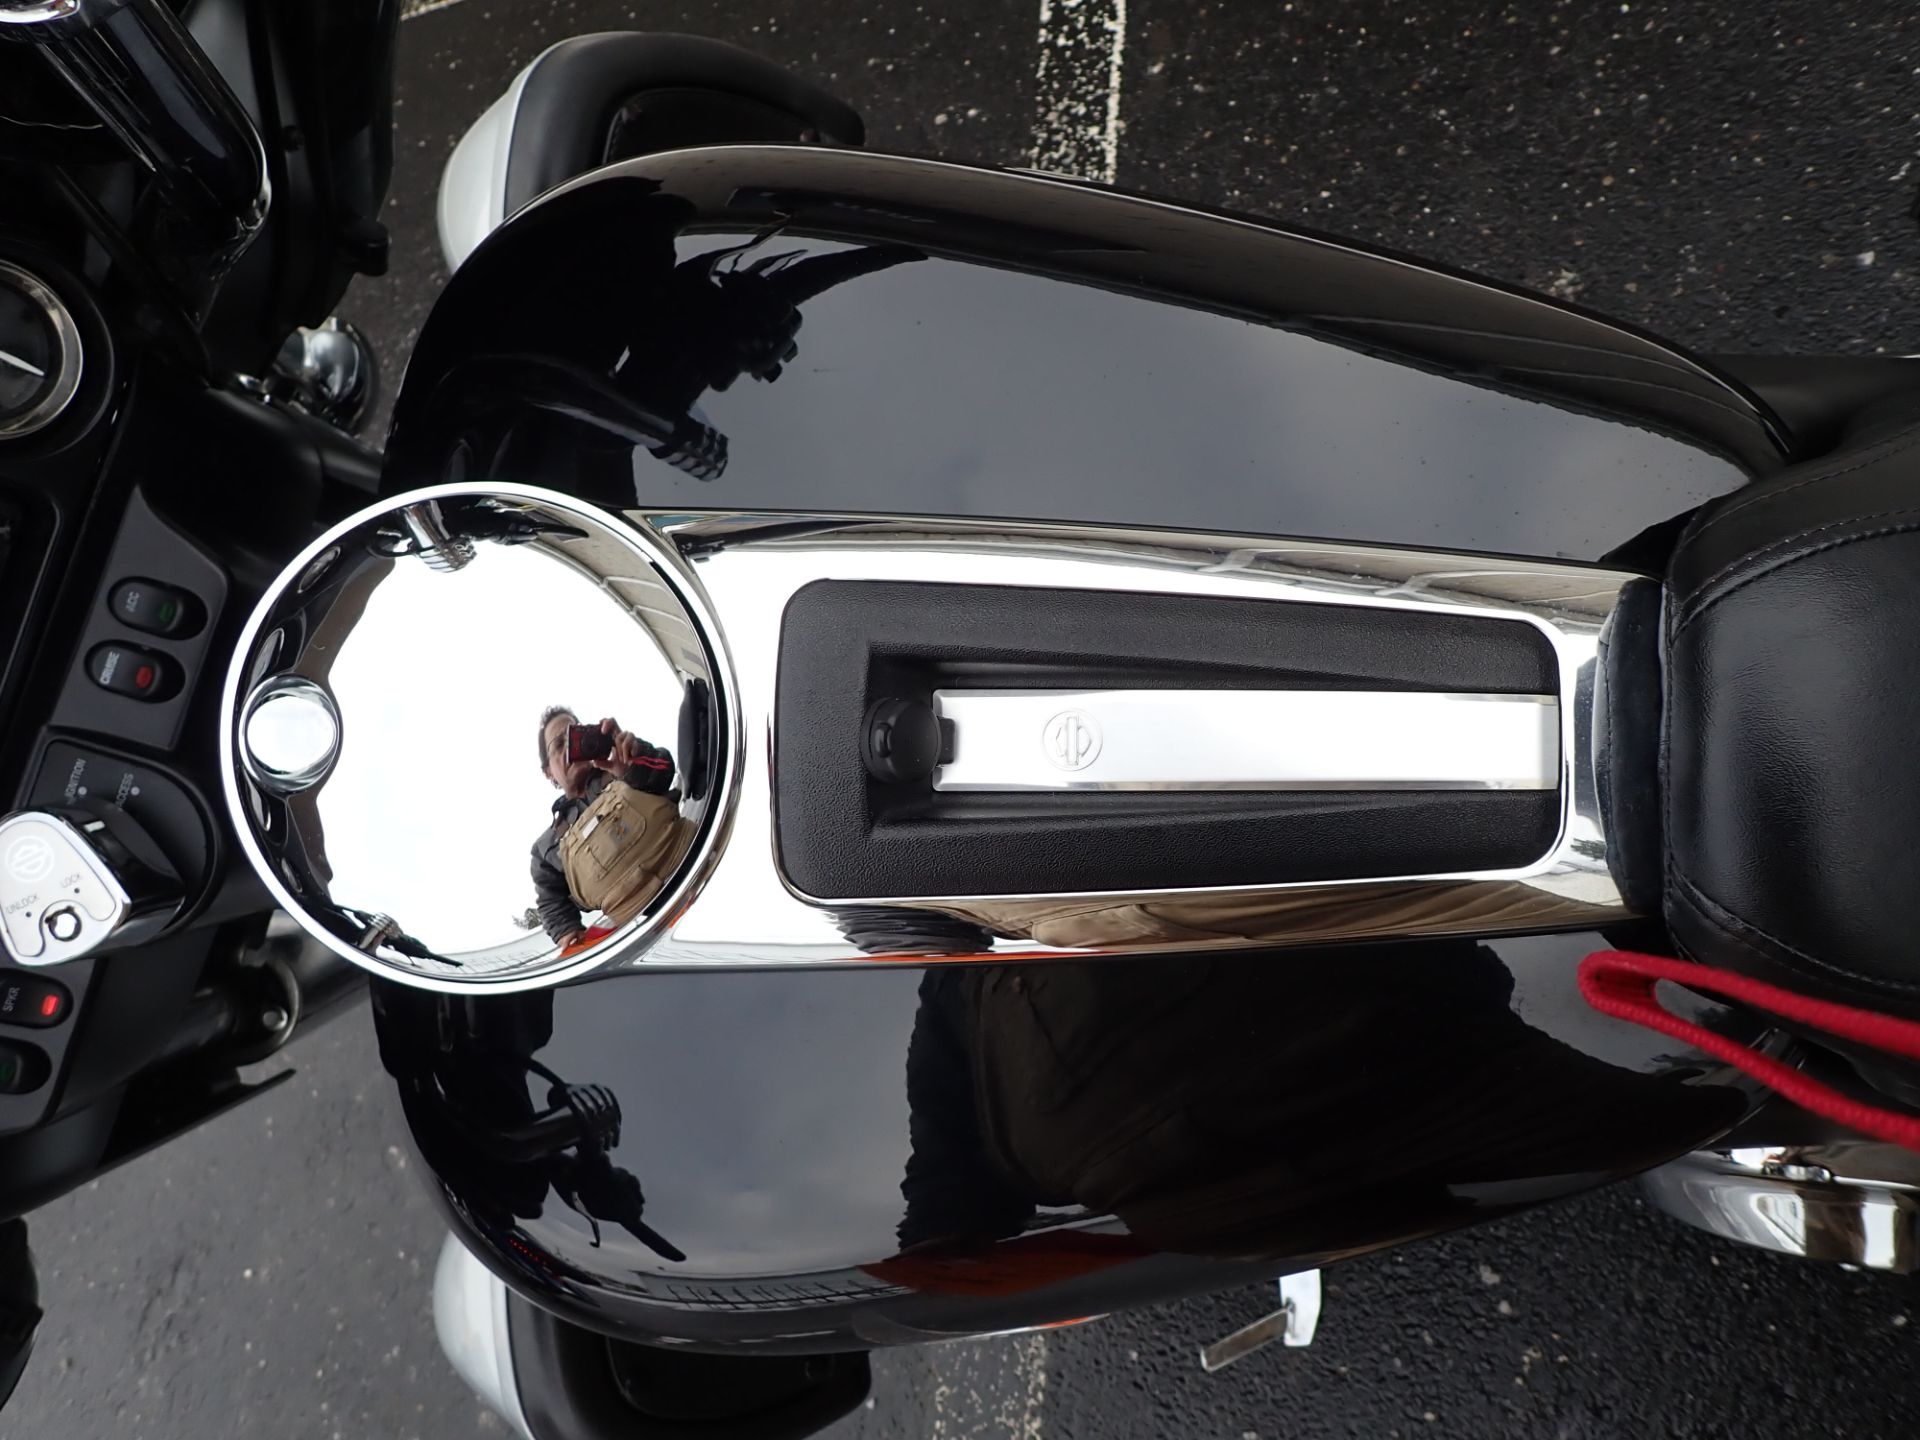 2013 Harley-Davidson Electra Glide® Ultra Limited in Massillon, Ohio - Photo 15